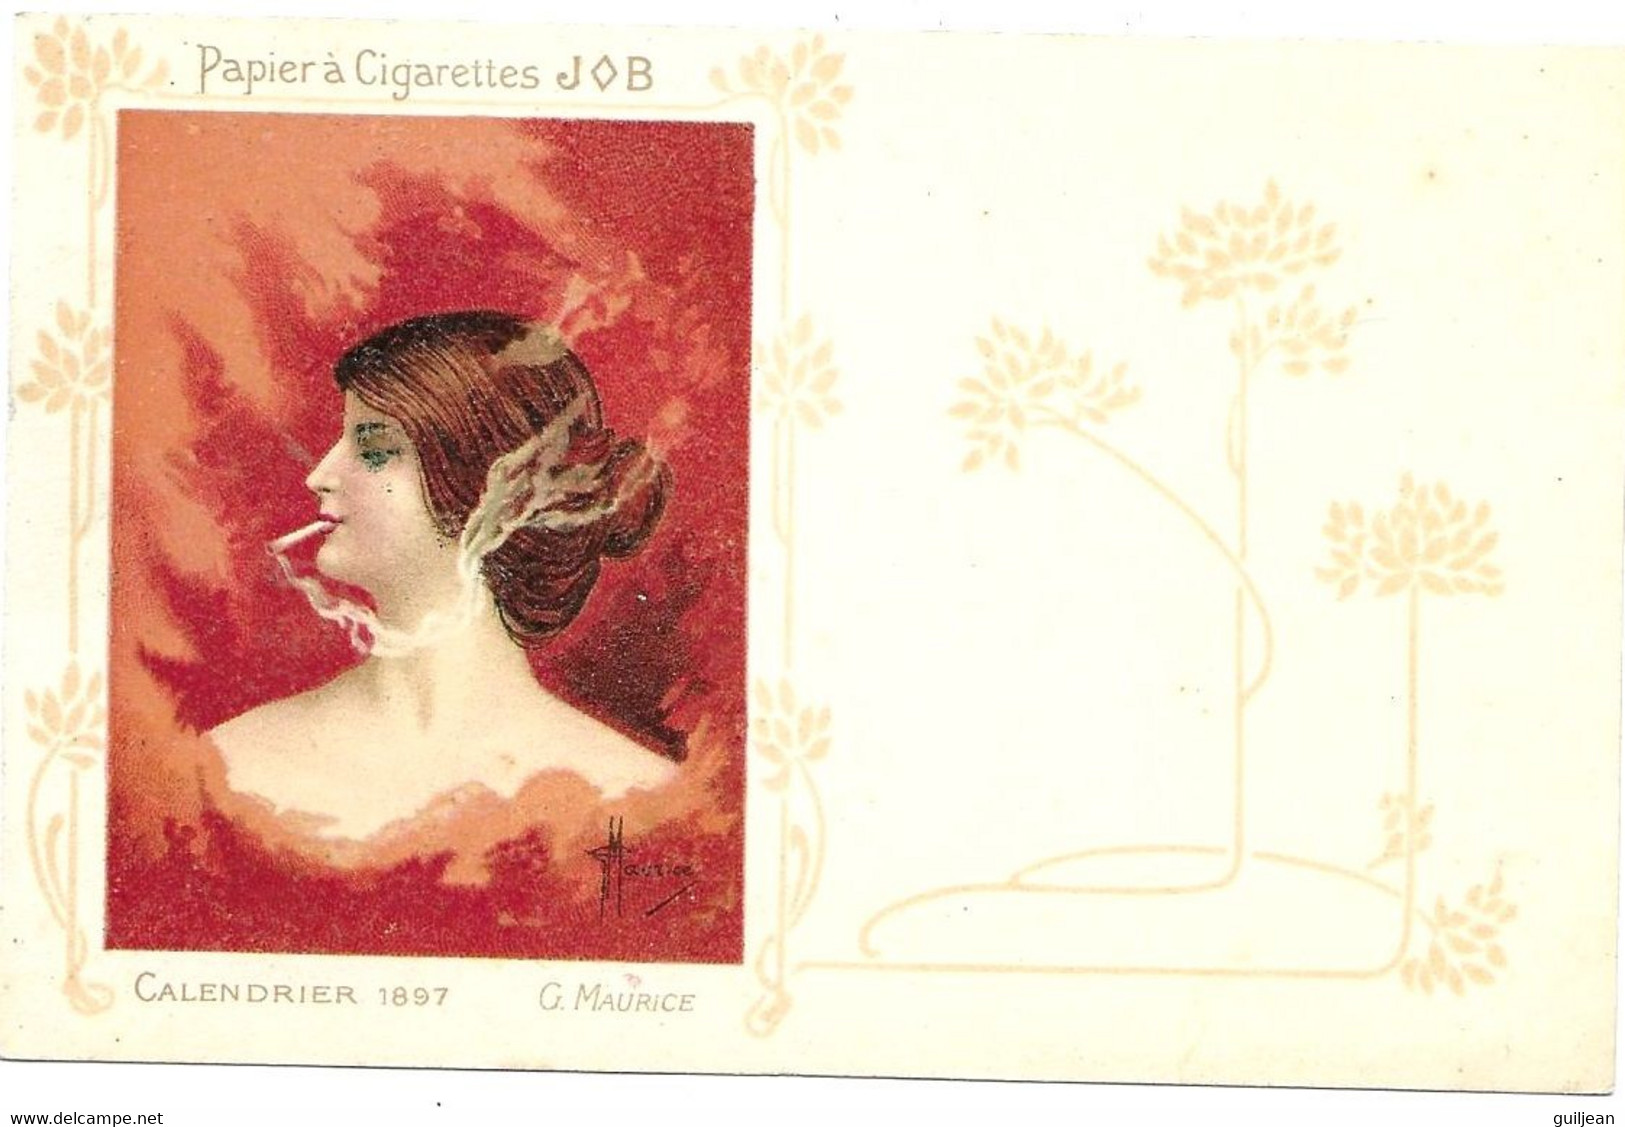 ILLUSTRATEUR - " PAPIER A CIGARETTES JOB " CALENDRIER 1897 - G. MAURICE - " - Maurice